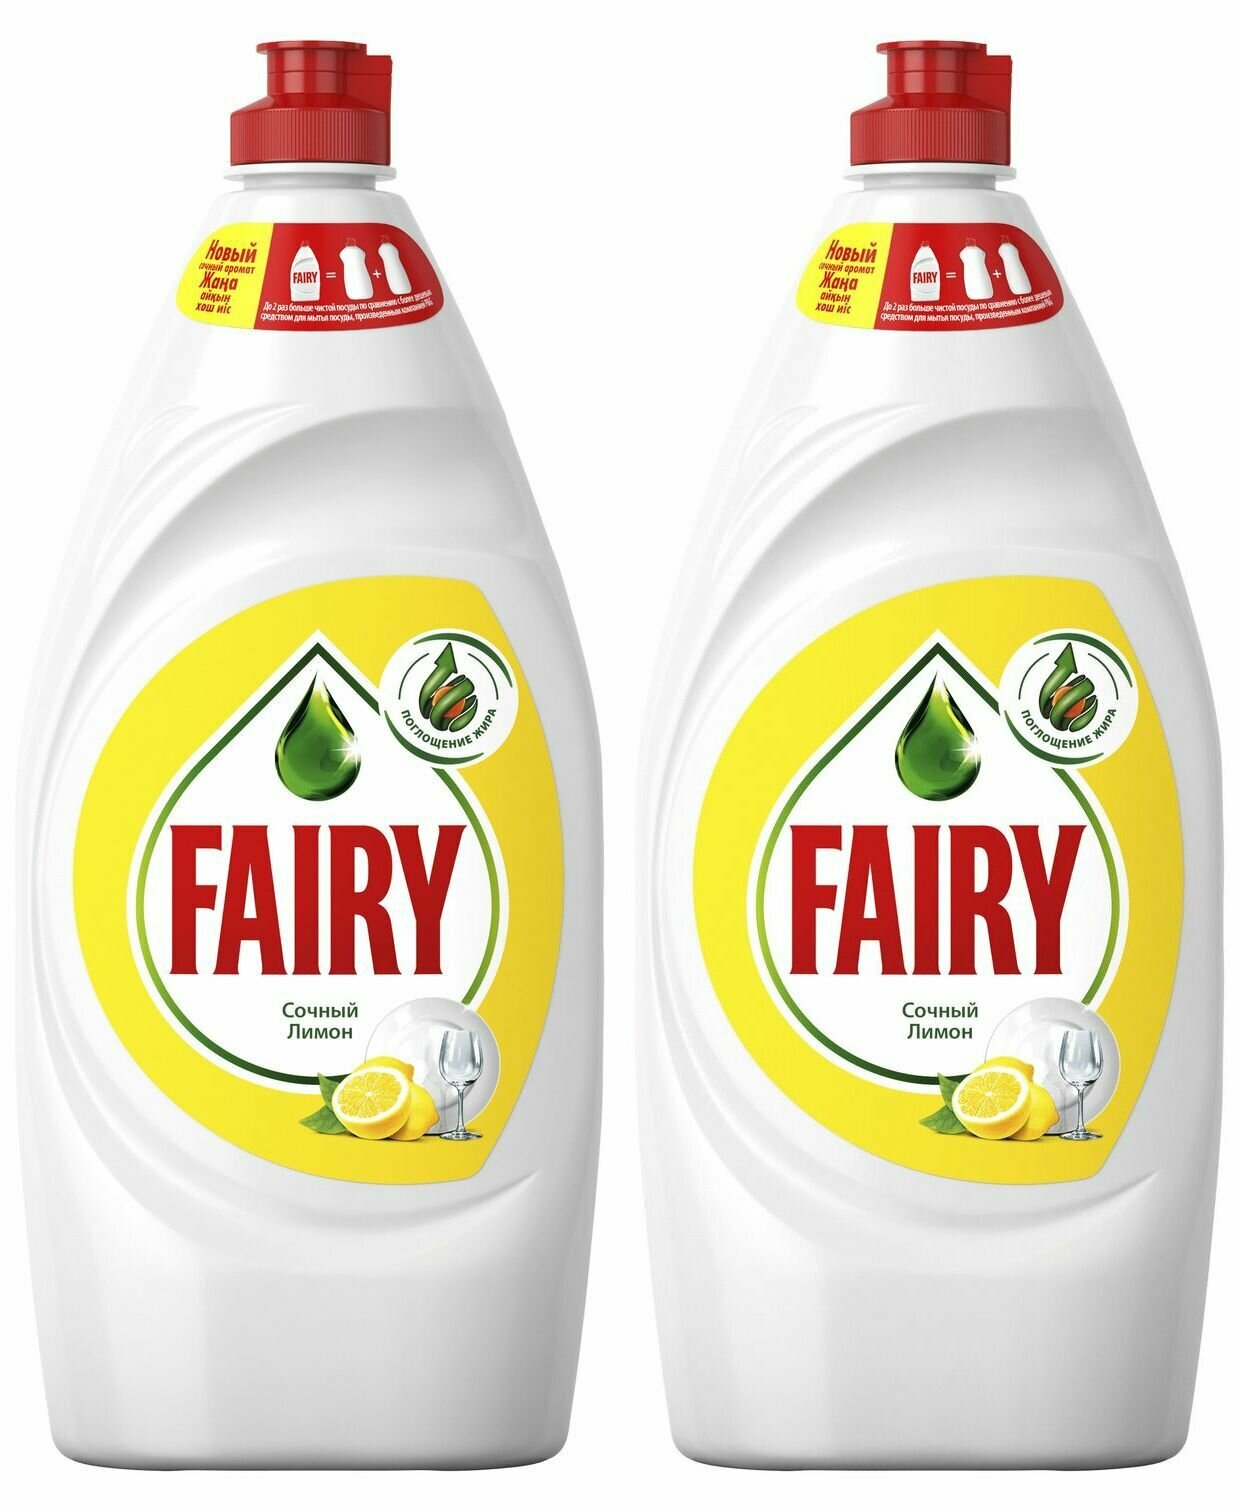 Fairy Средство для мытья посуды Сочный Лимон, 900 мл 2 шт